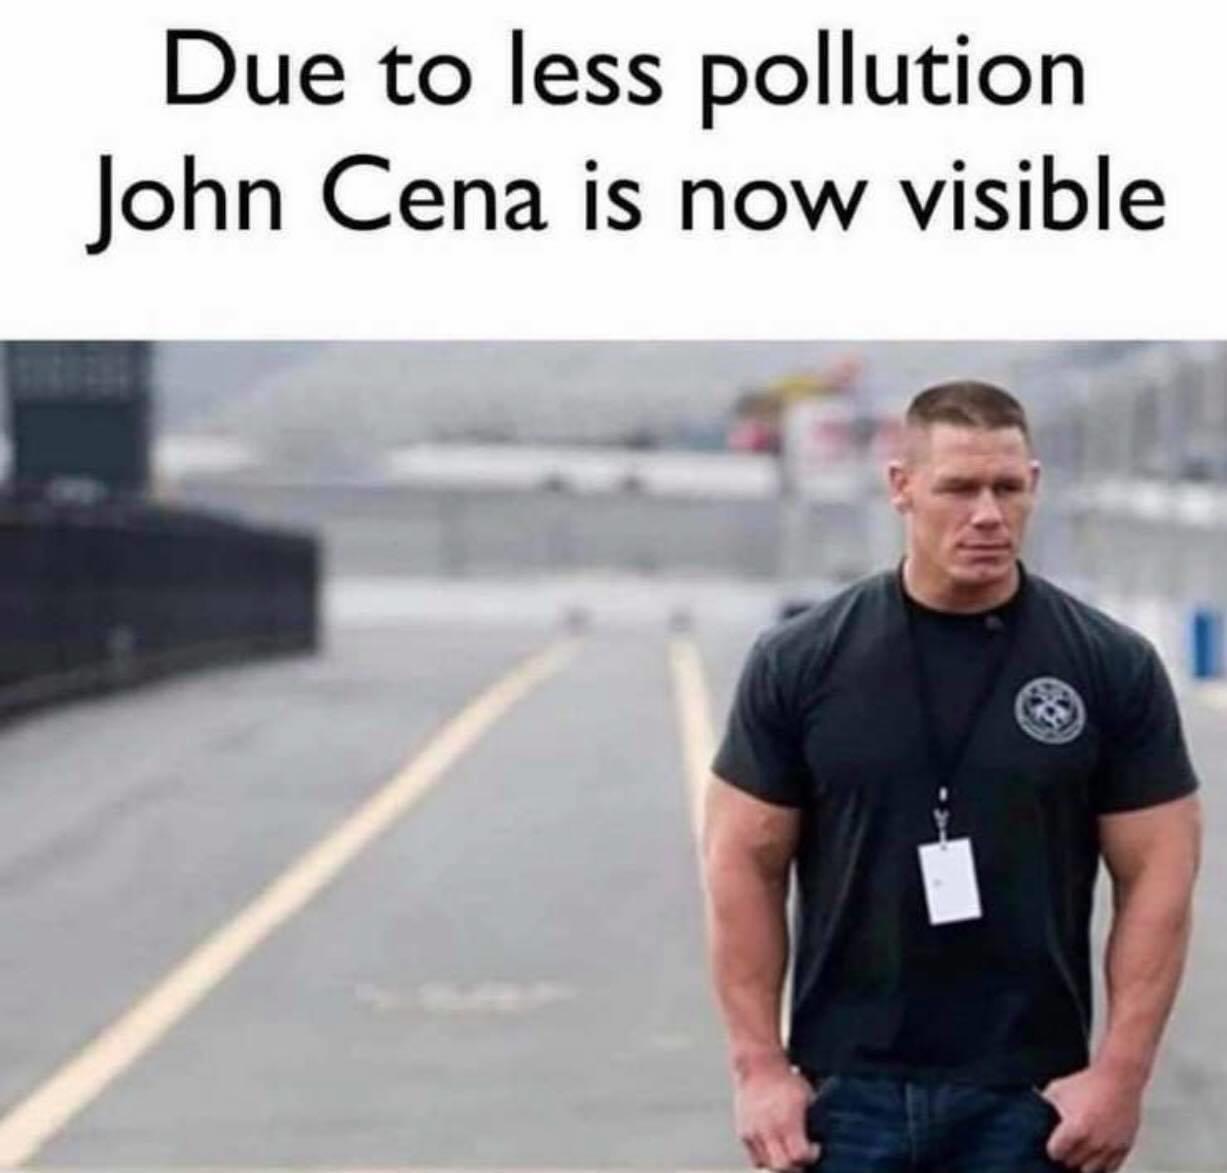 john cena pollution meme - Due to less pollution John Cena is now visible